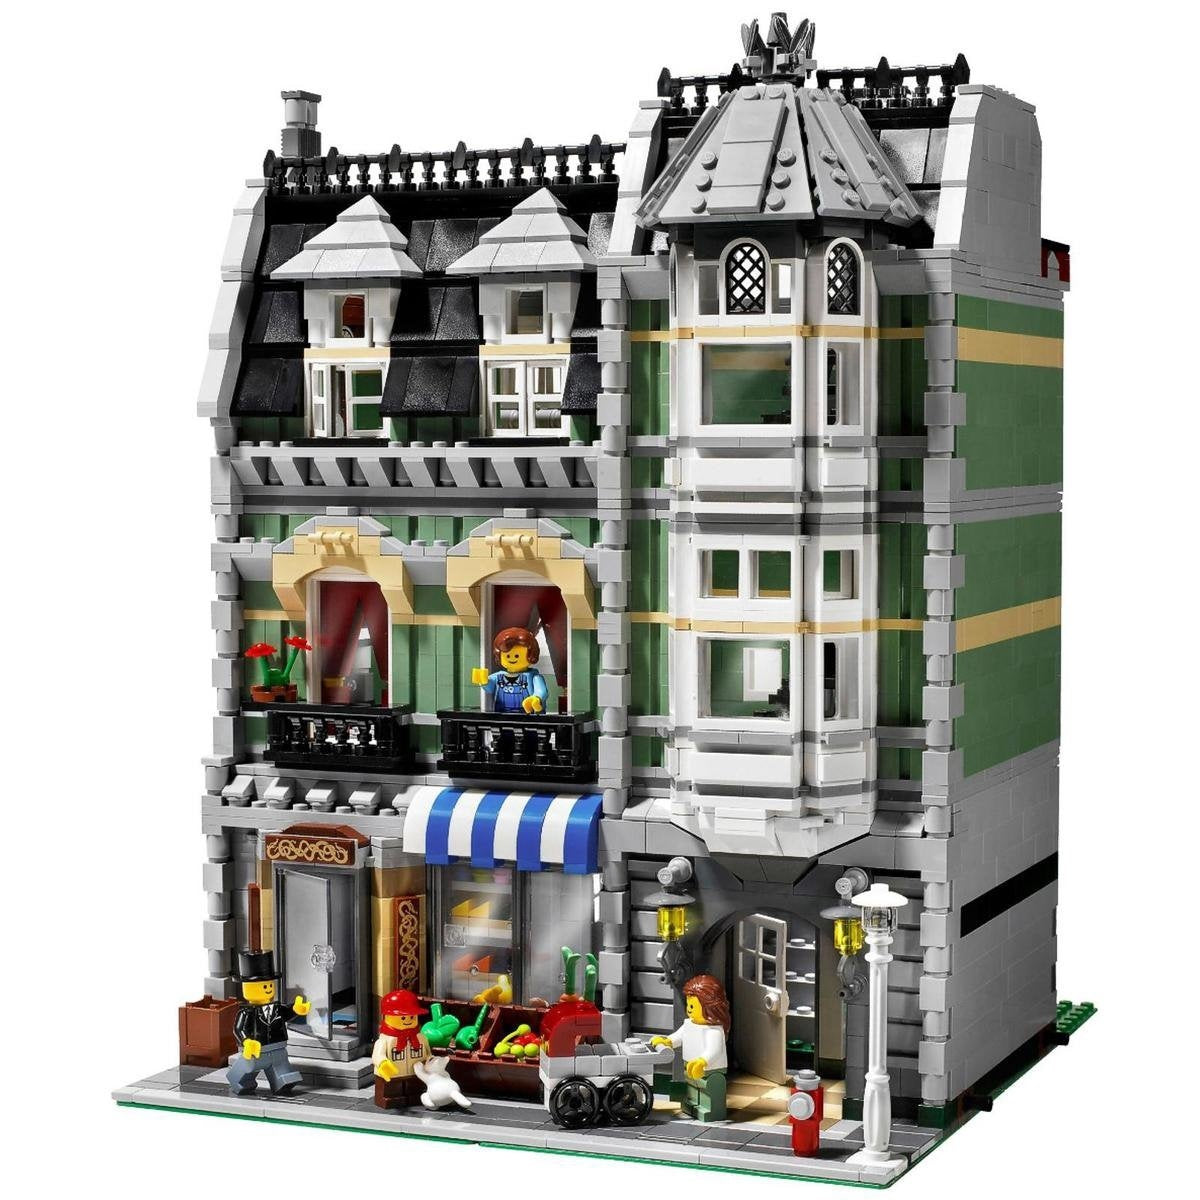 LEGO L'épicier vert 10185 